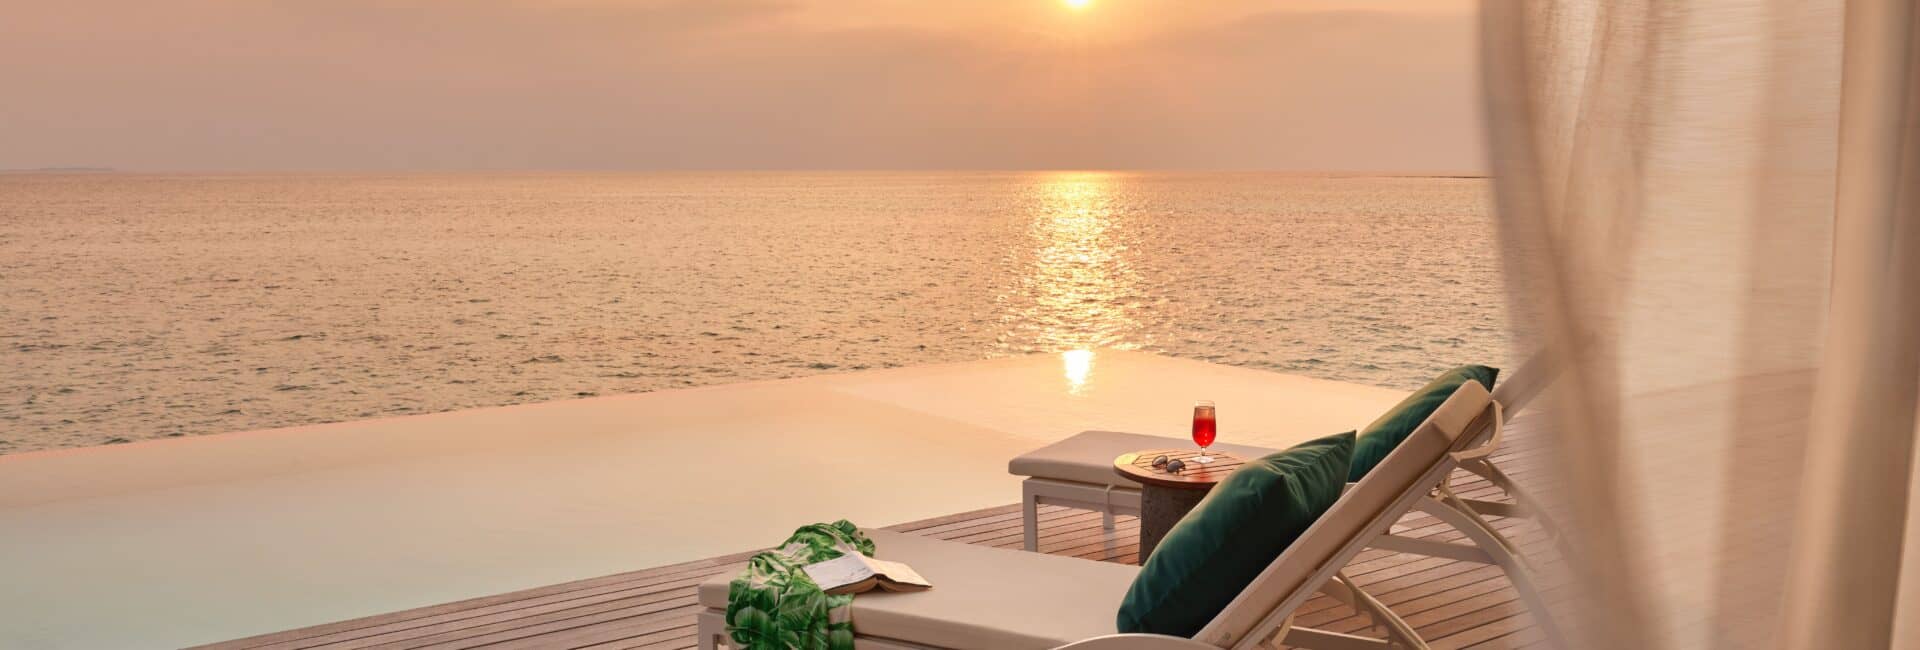 Jumeirah Maldives_High_resolution_300dpi-Jumeirah Maldives - Pool Deck sunset view